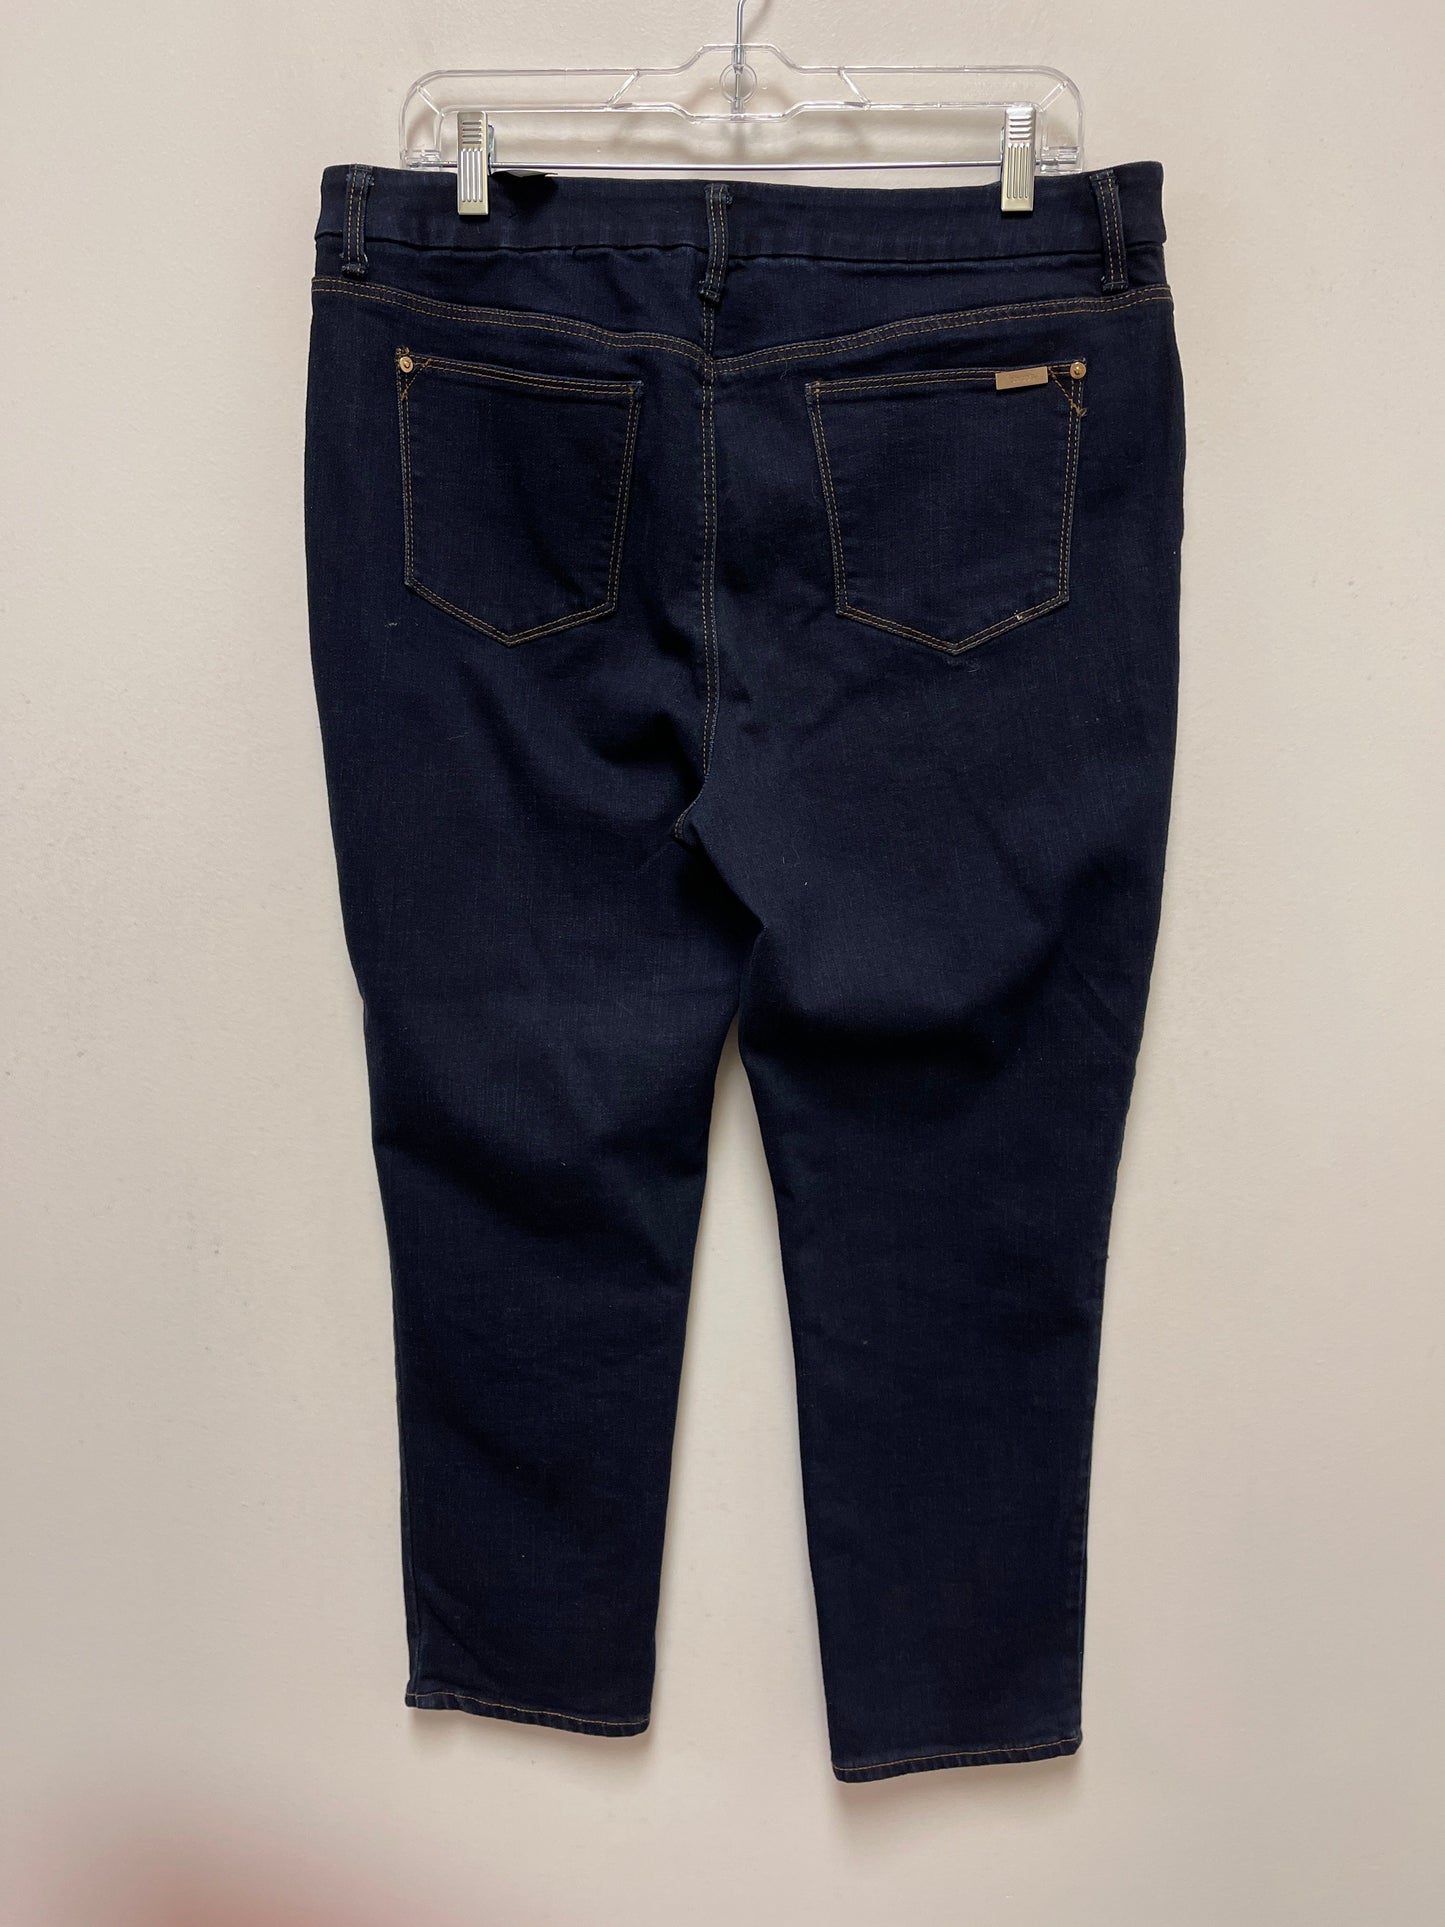 Blue Denim Jeans Straight Chicos, Size 12